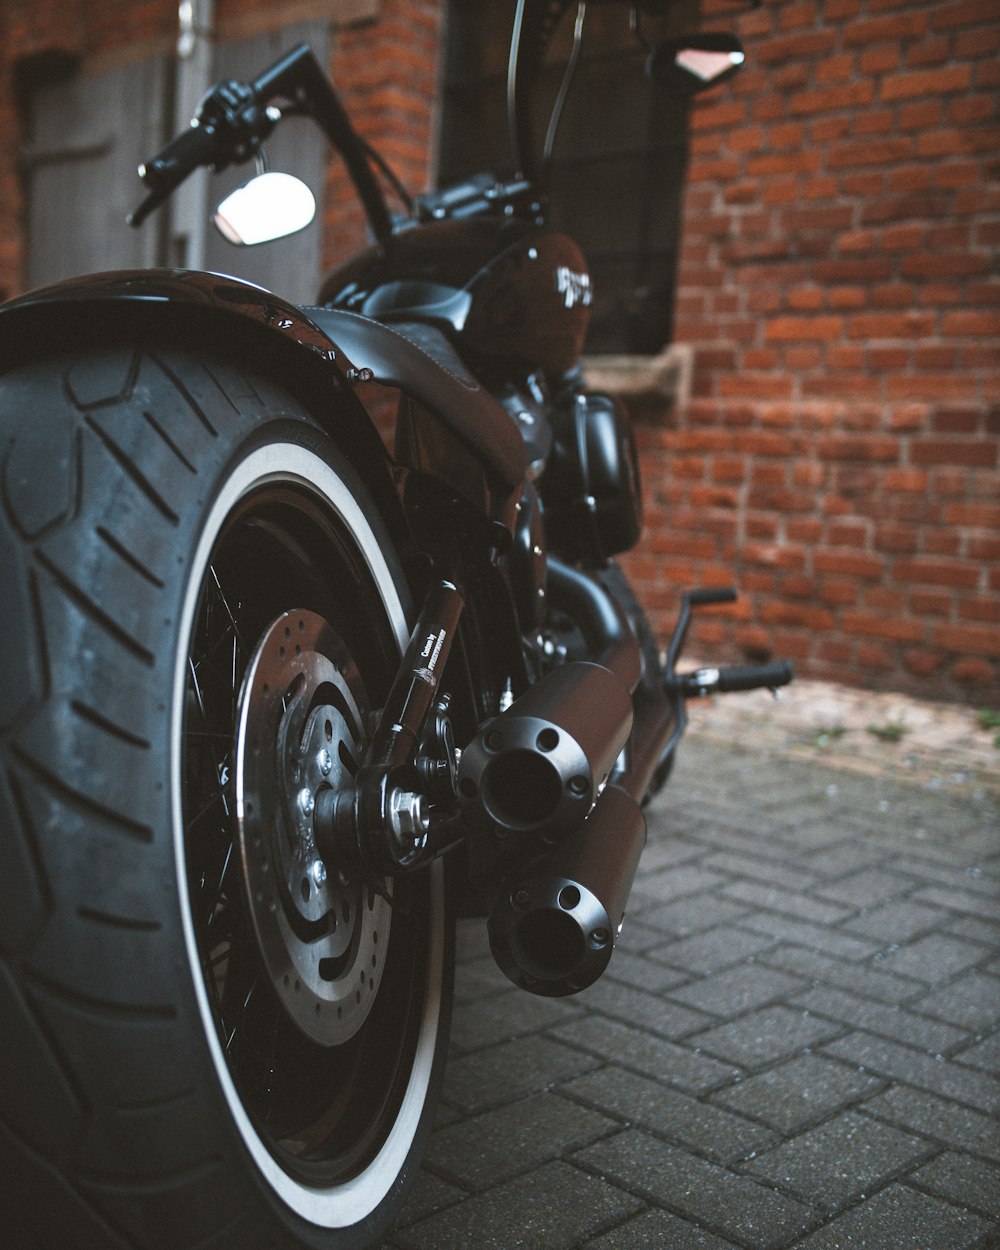 black and silver motorcycle on brown brick floor